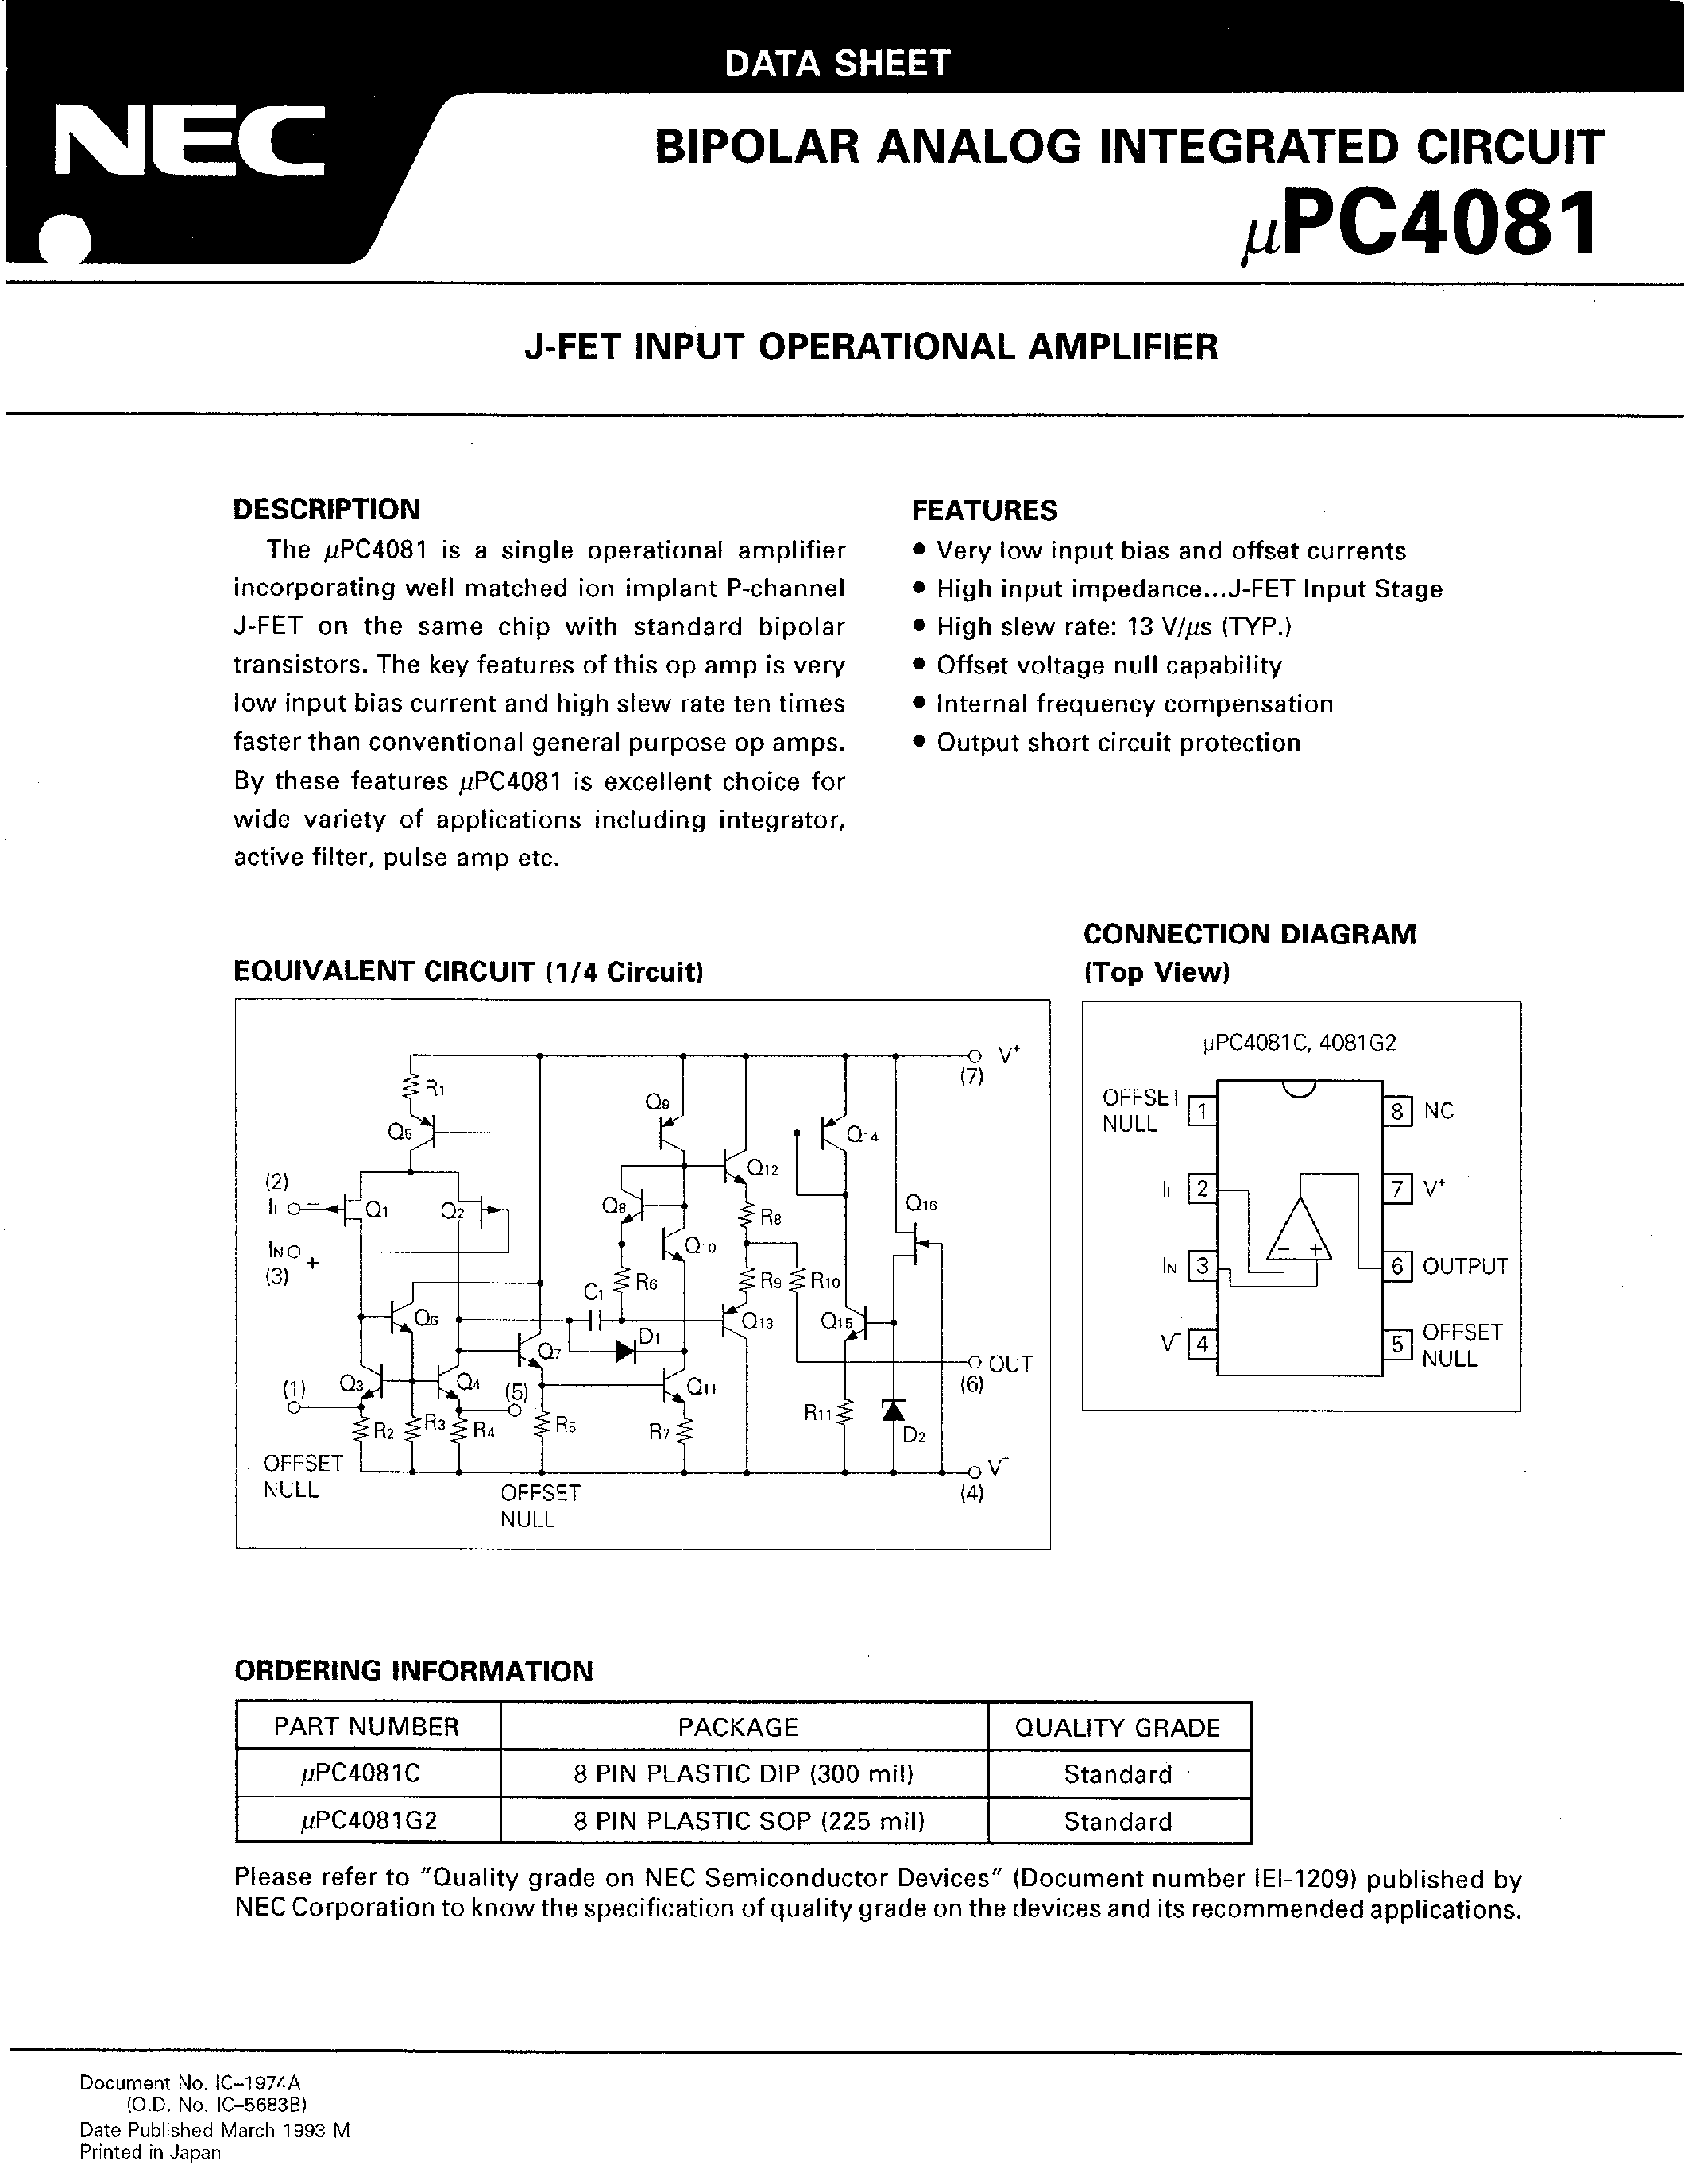 Даташит UPC4081C - J-FET INPUT OPERATIONAL AMPLIFIER страница 1